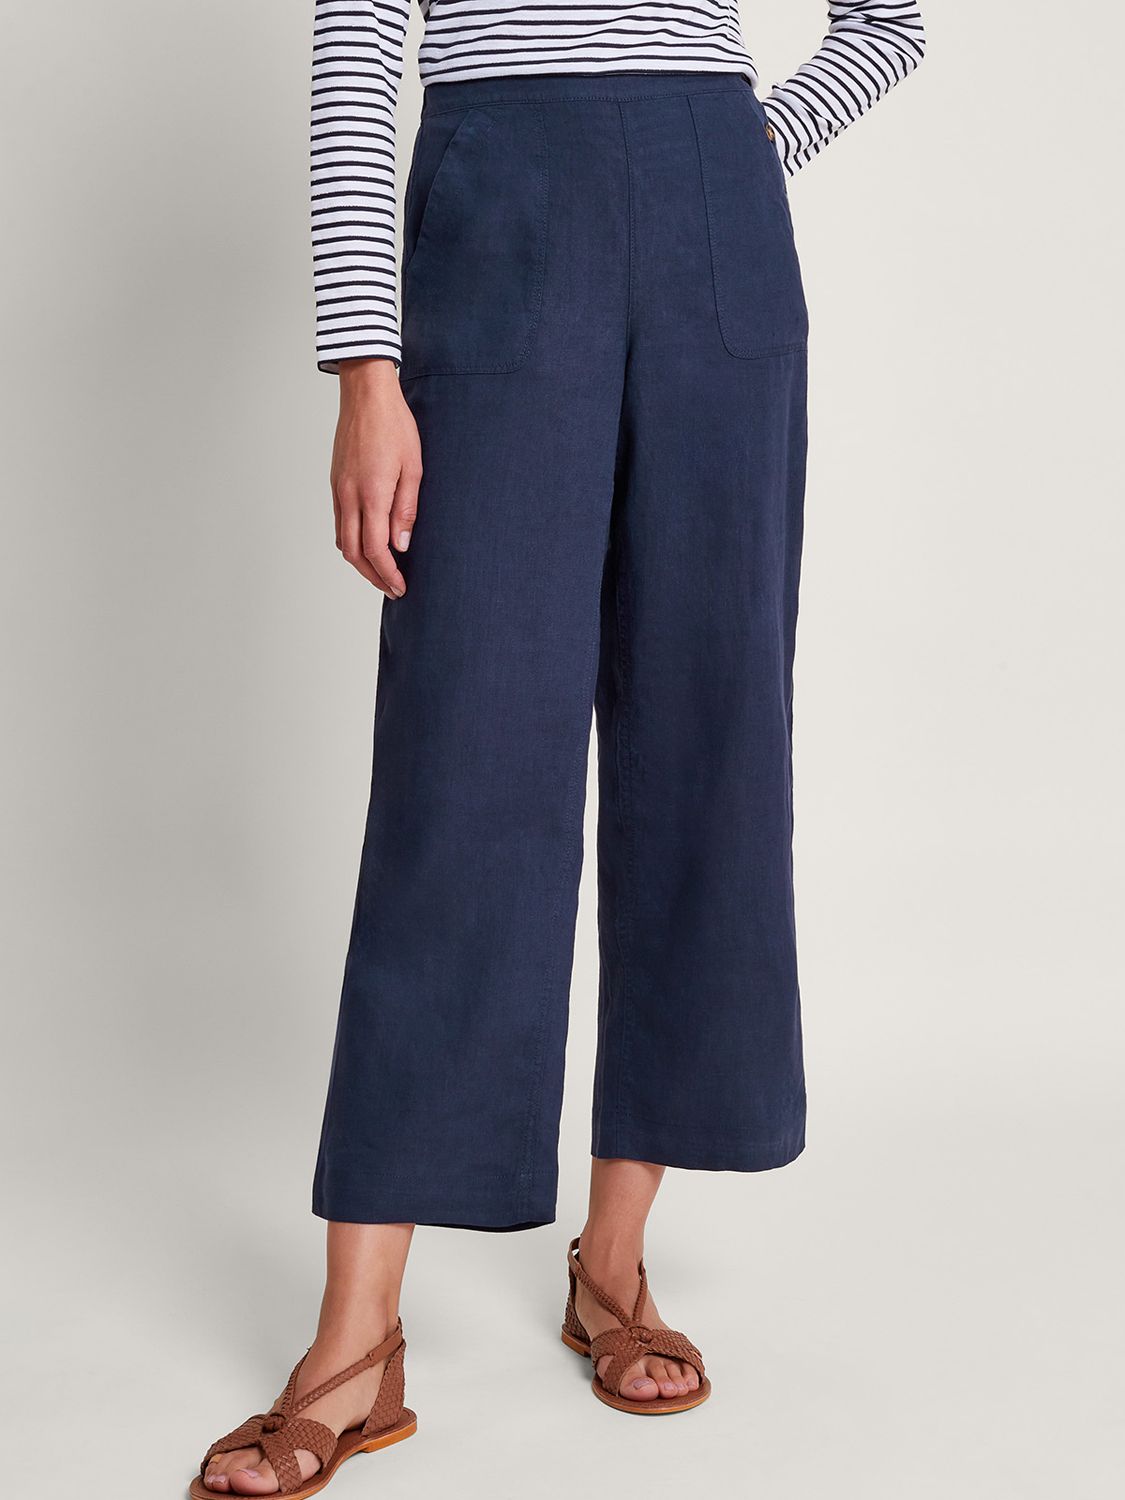 Monsoon Parker Linen Short Cropped Trousers, Navy, L